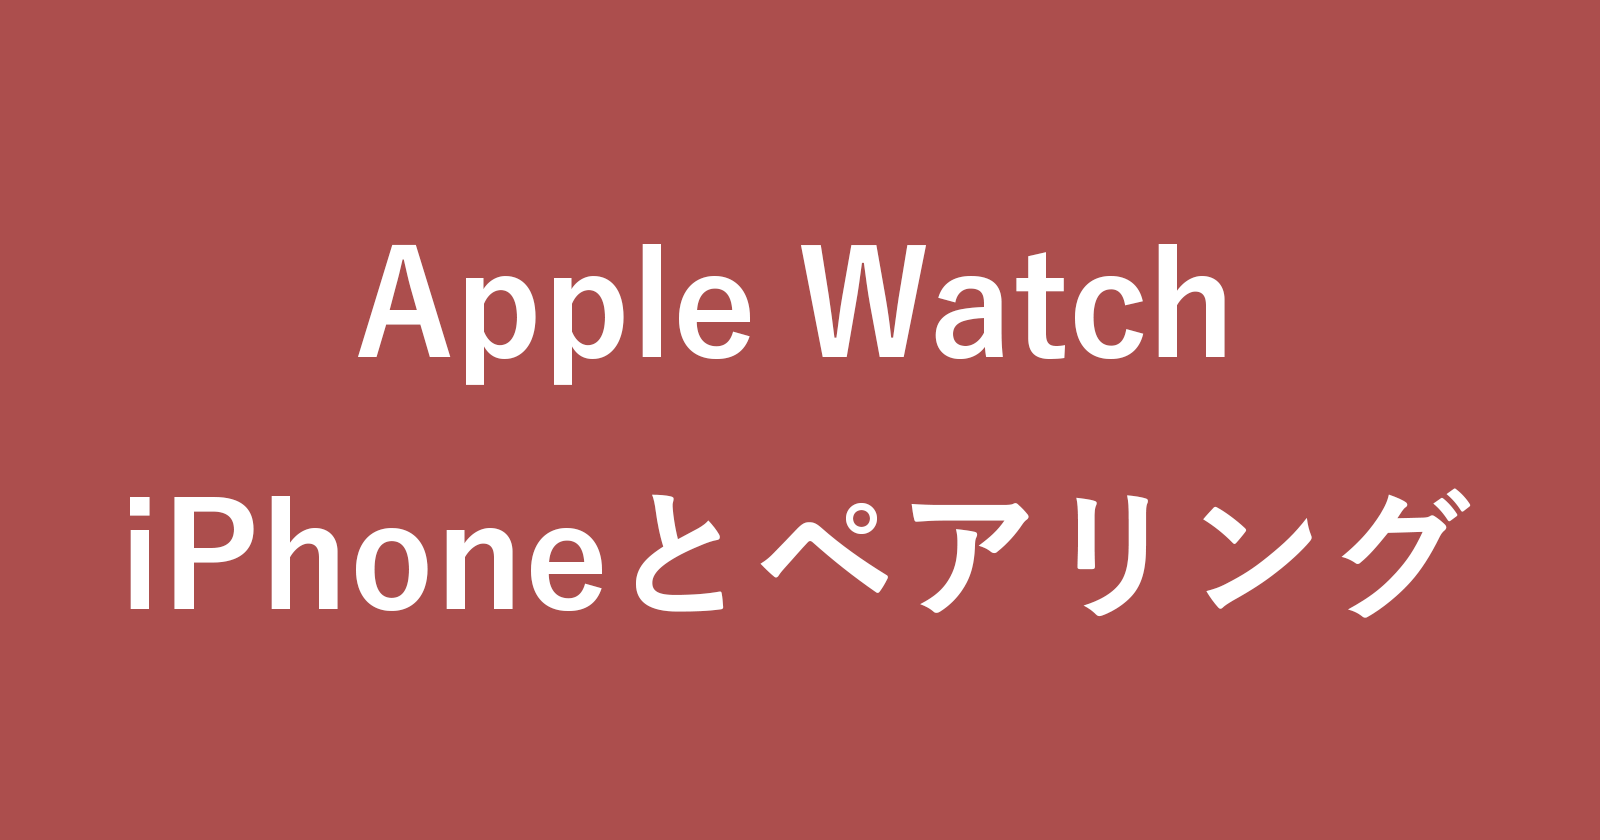 iphone pair apple watch